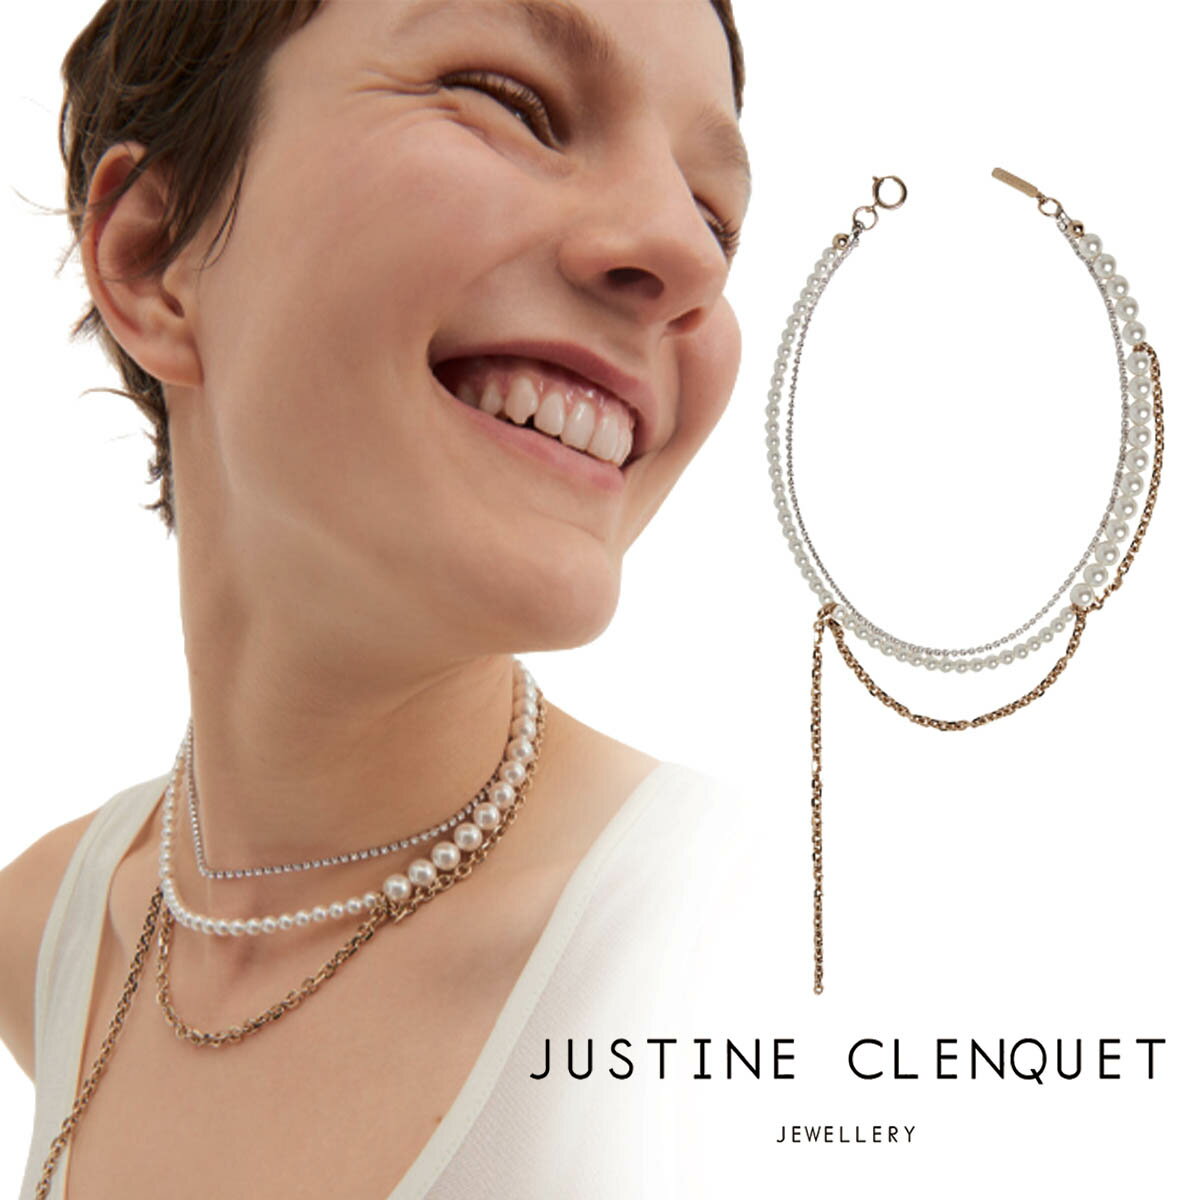 WXeB[kNP Justine Clenquet W lbNX Jill necklace `[J[ pWE NX^p[ fB[X[ANZT[]